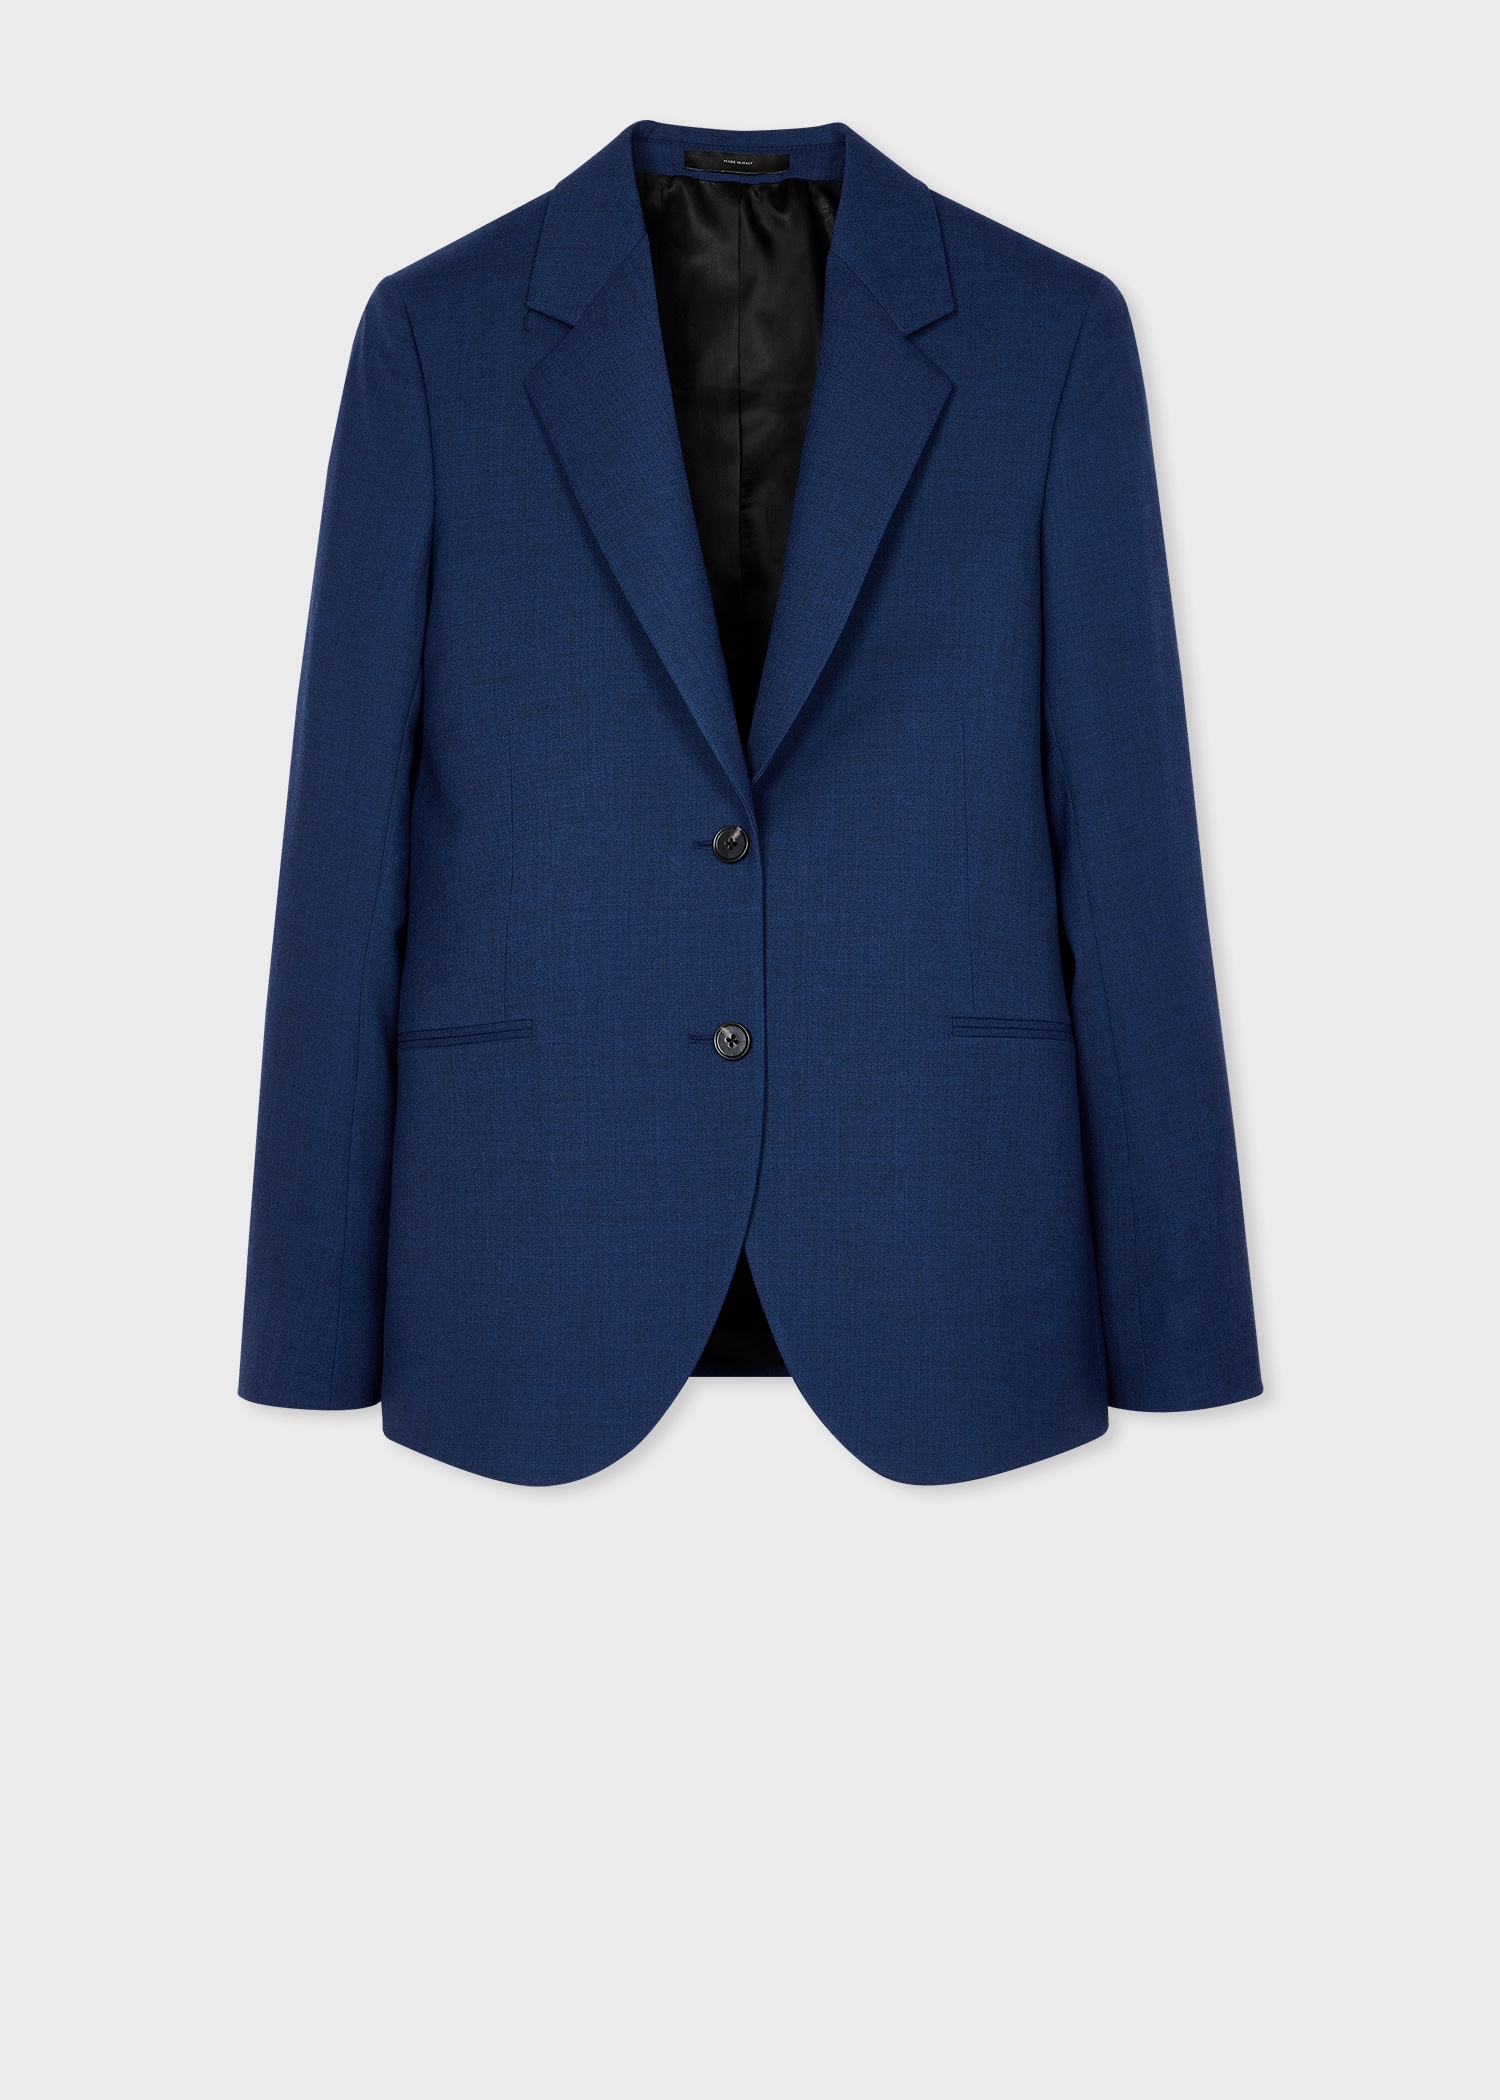 Women's A Suit To Travel In - Dark Blue Wool Two-Button Blazer - 1